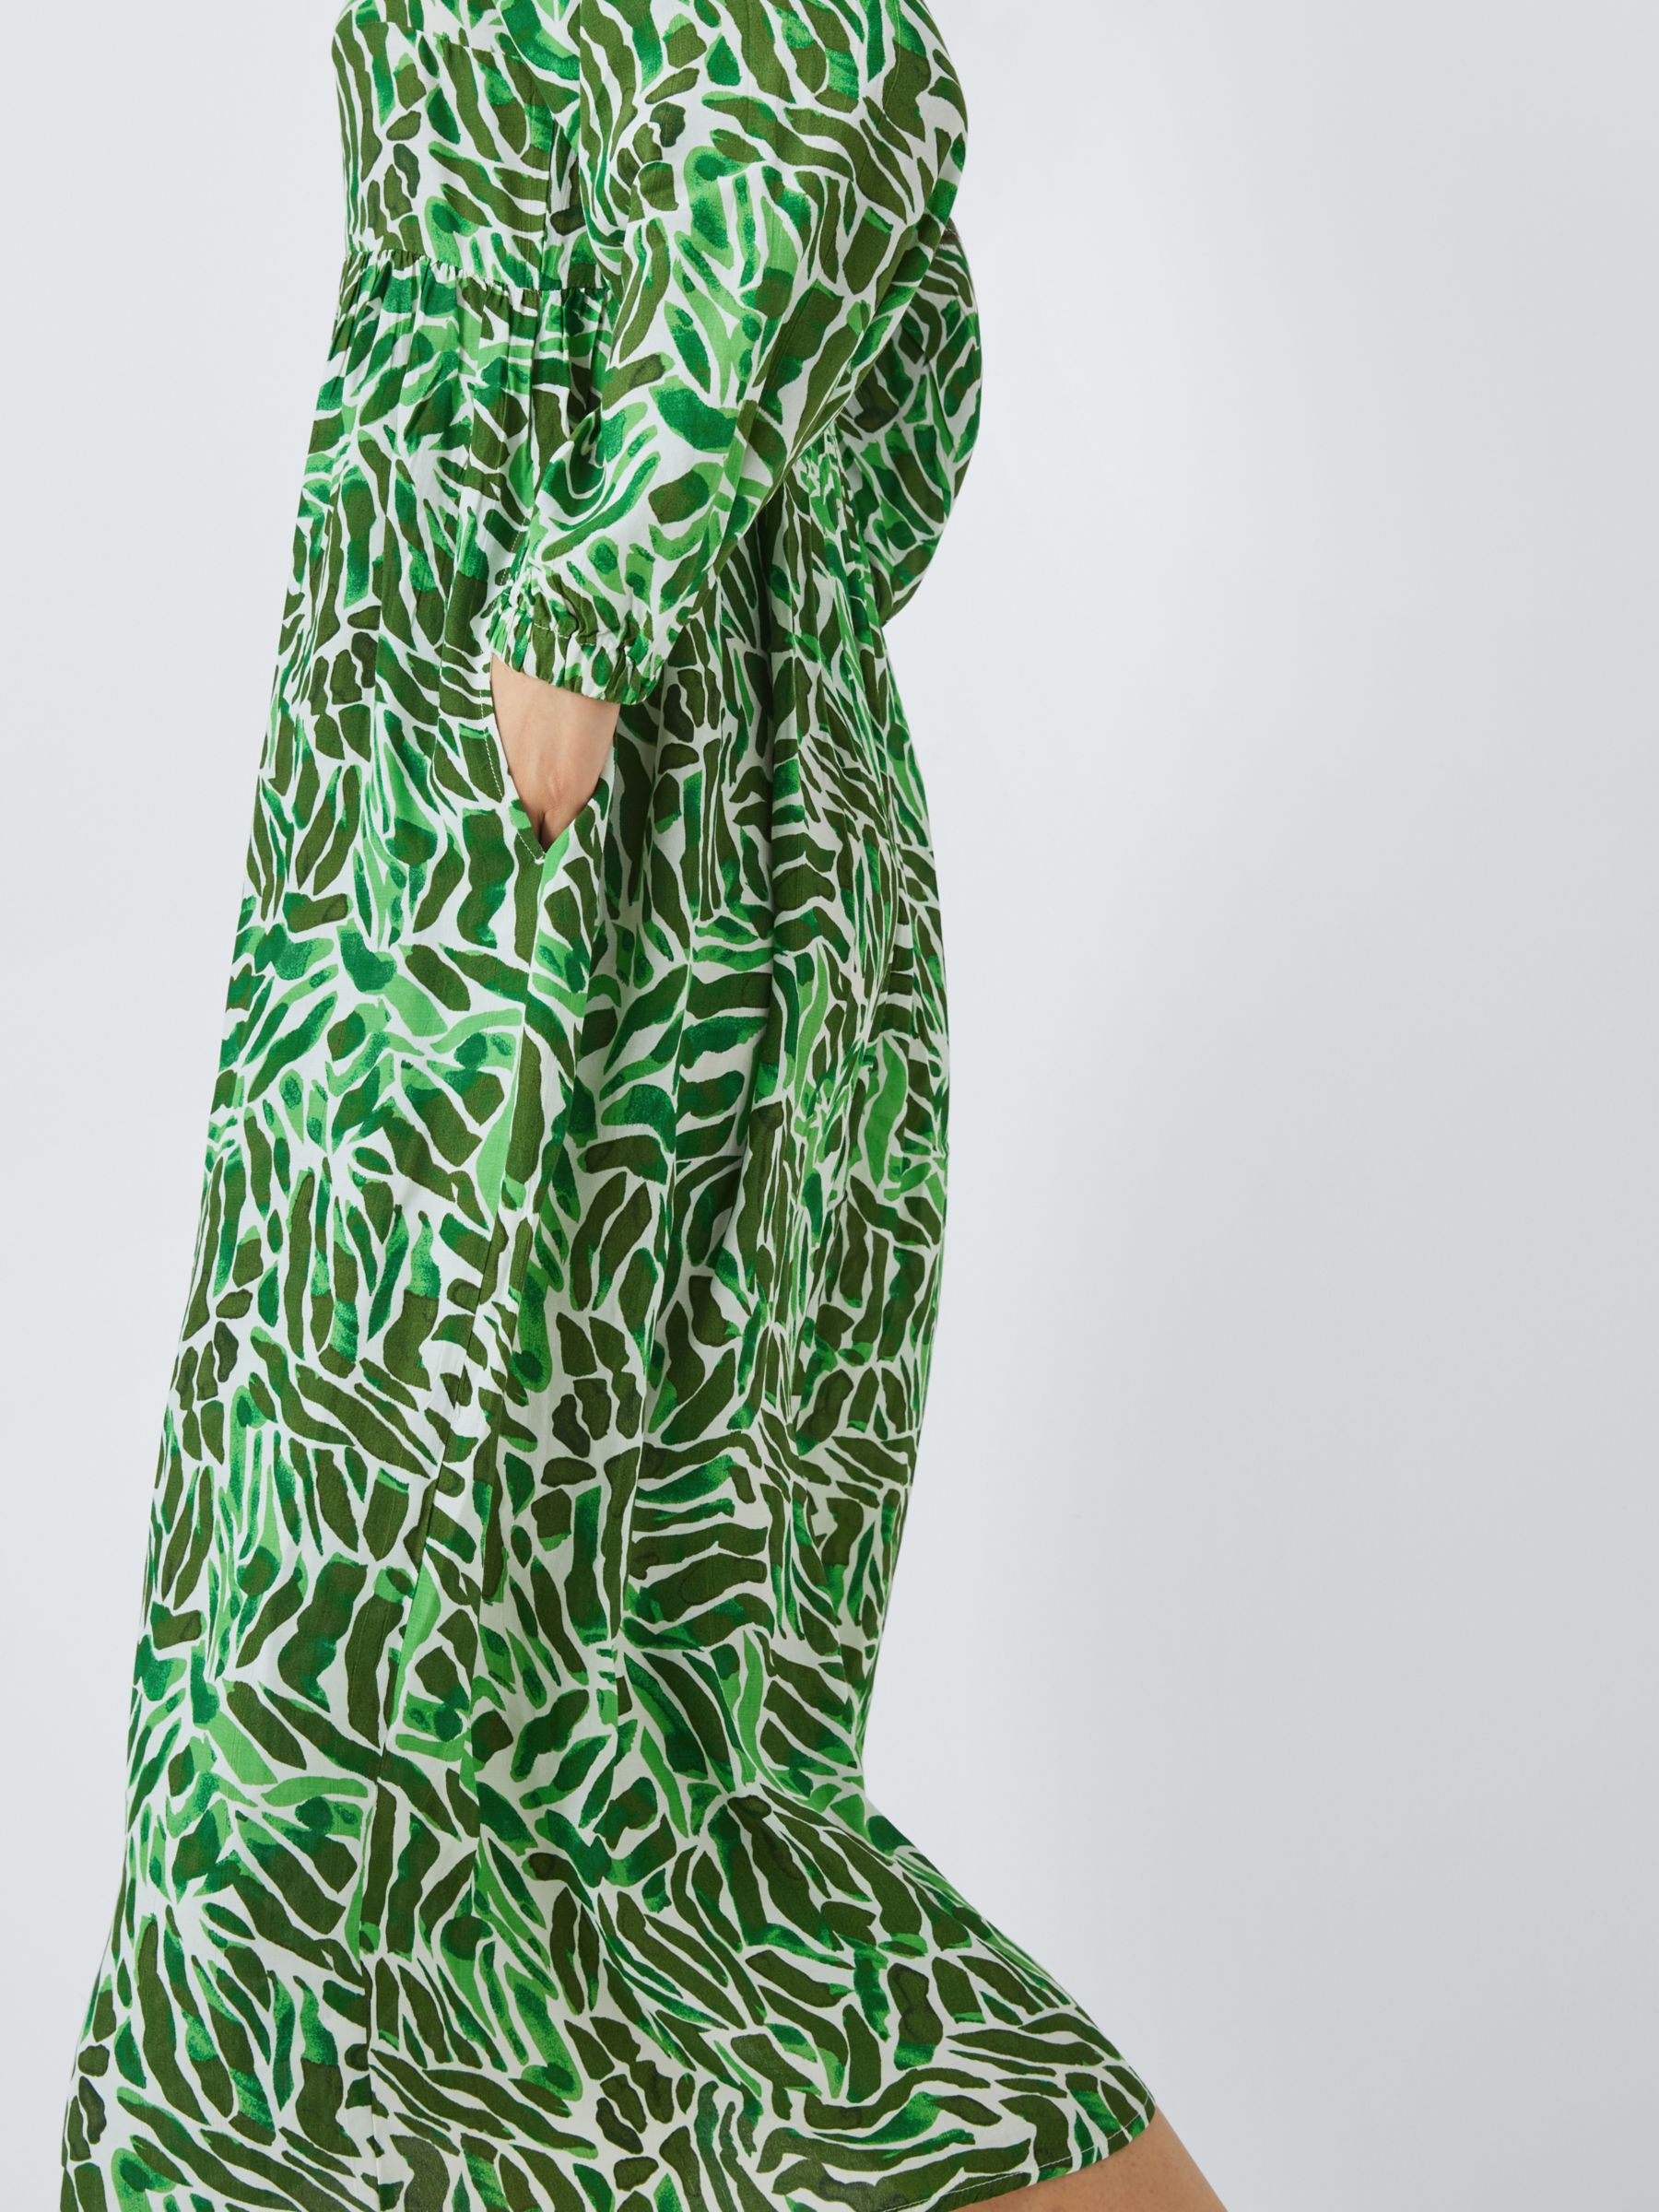 John Lewis ANYDAY Solare Print Midi Dress, Green/Multi, 10